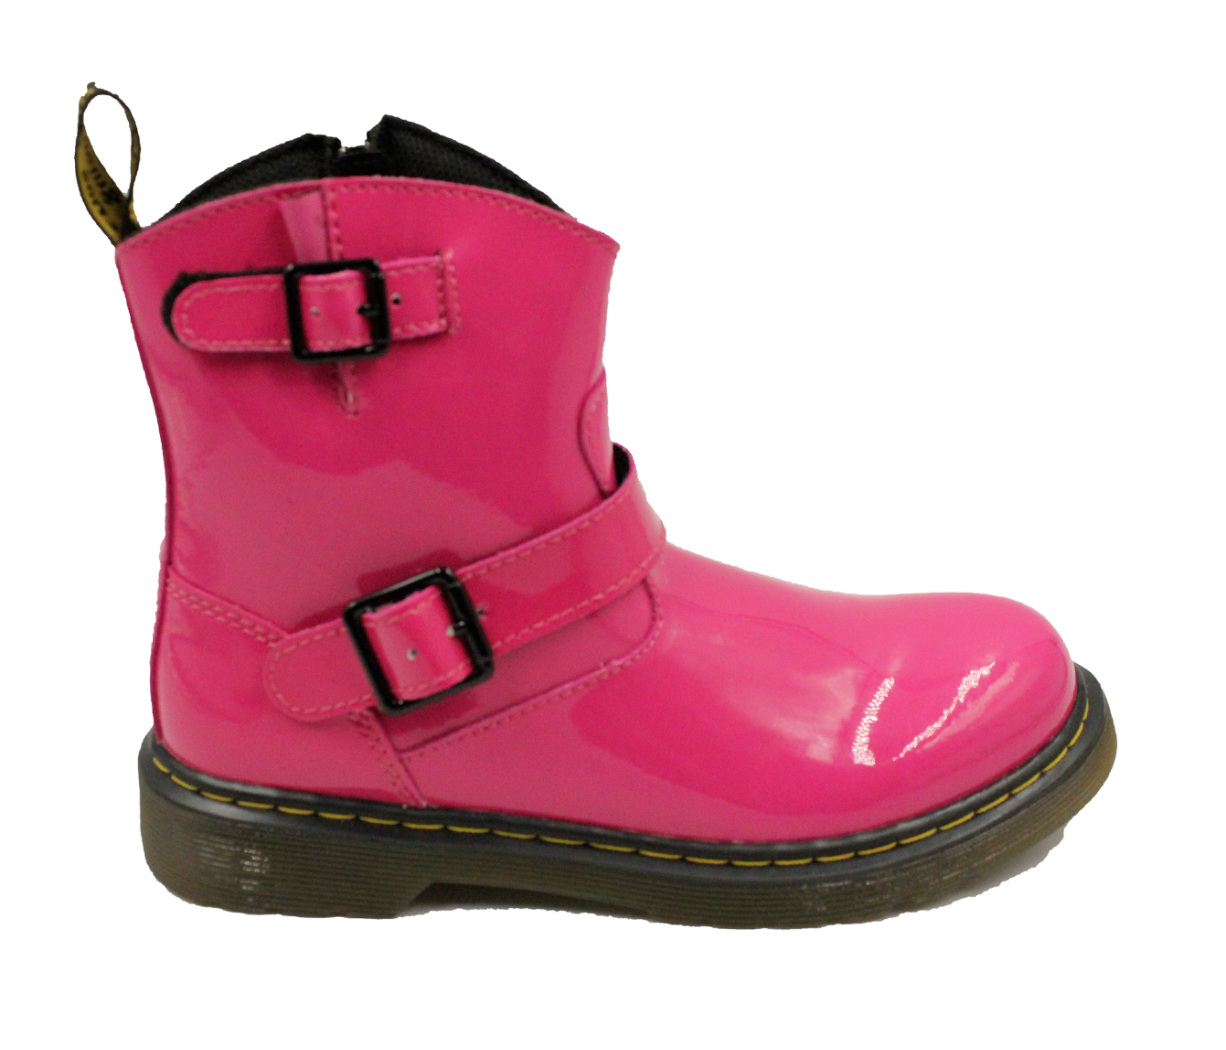 DR. MARTENS Blip AirWair Girls Combat Patent Lamper Boot Hot Pink Size 2 NEW